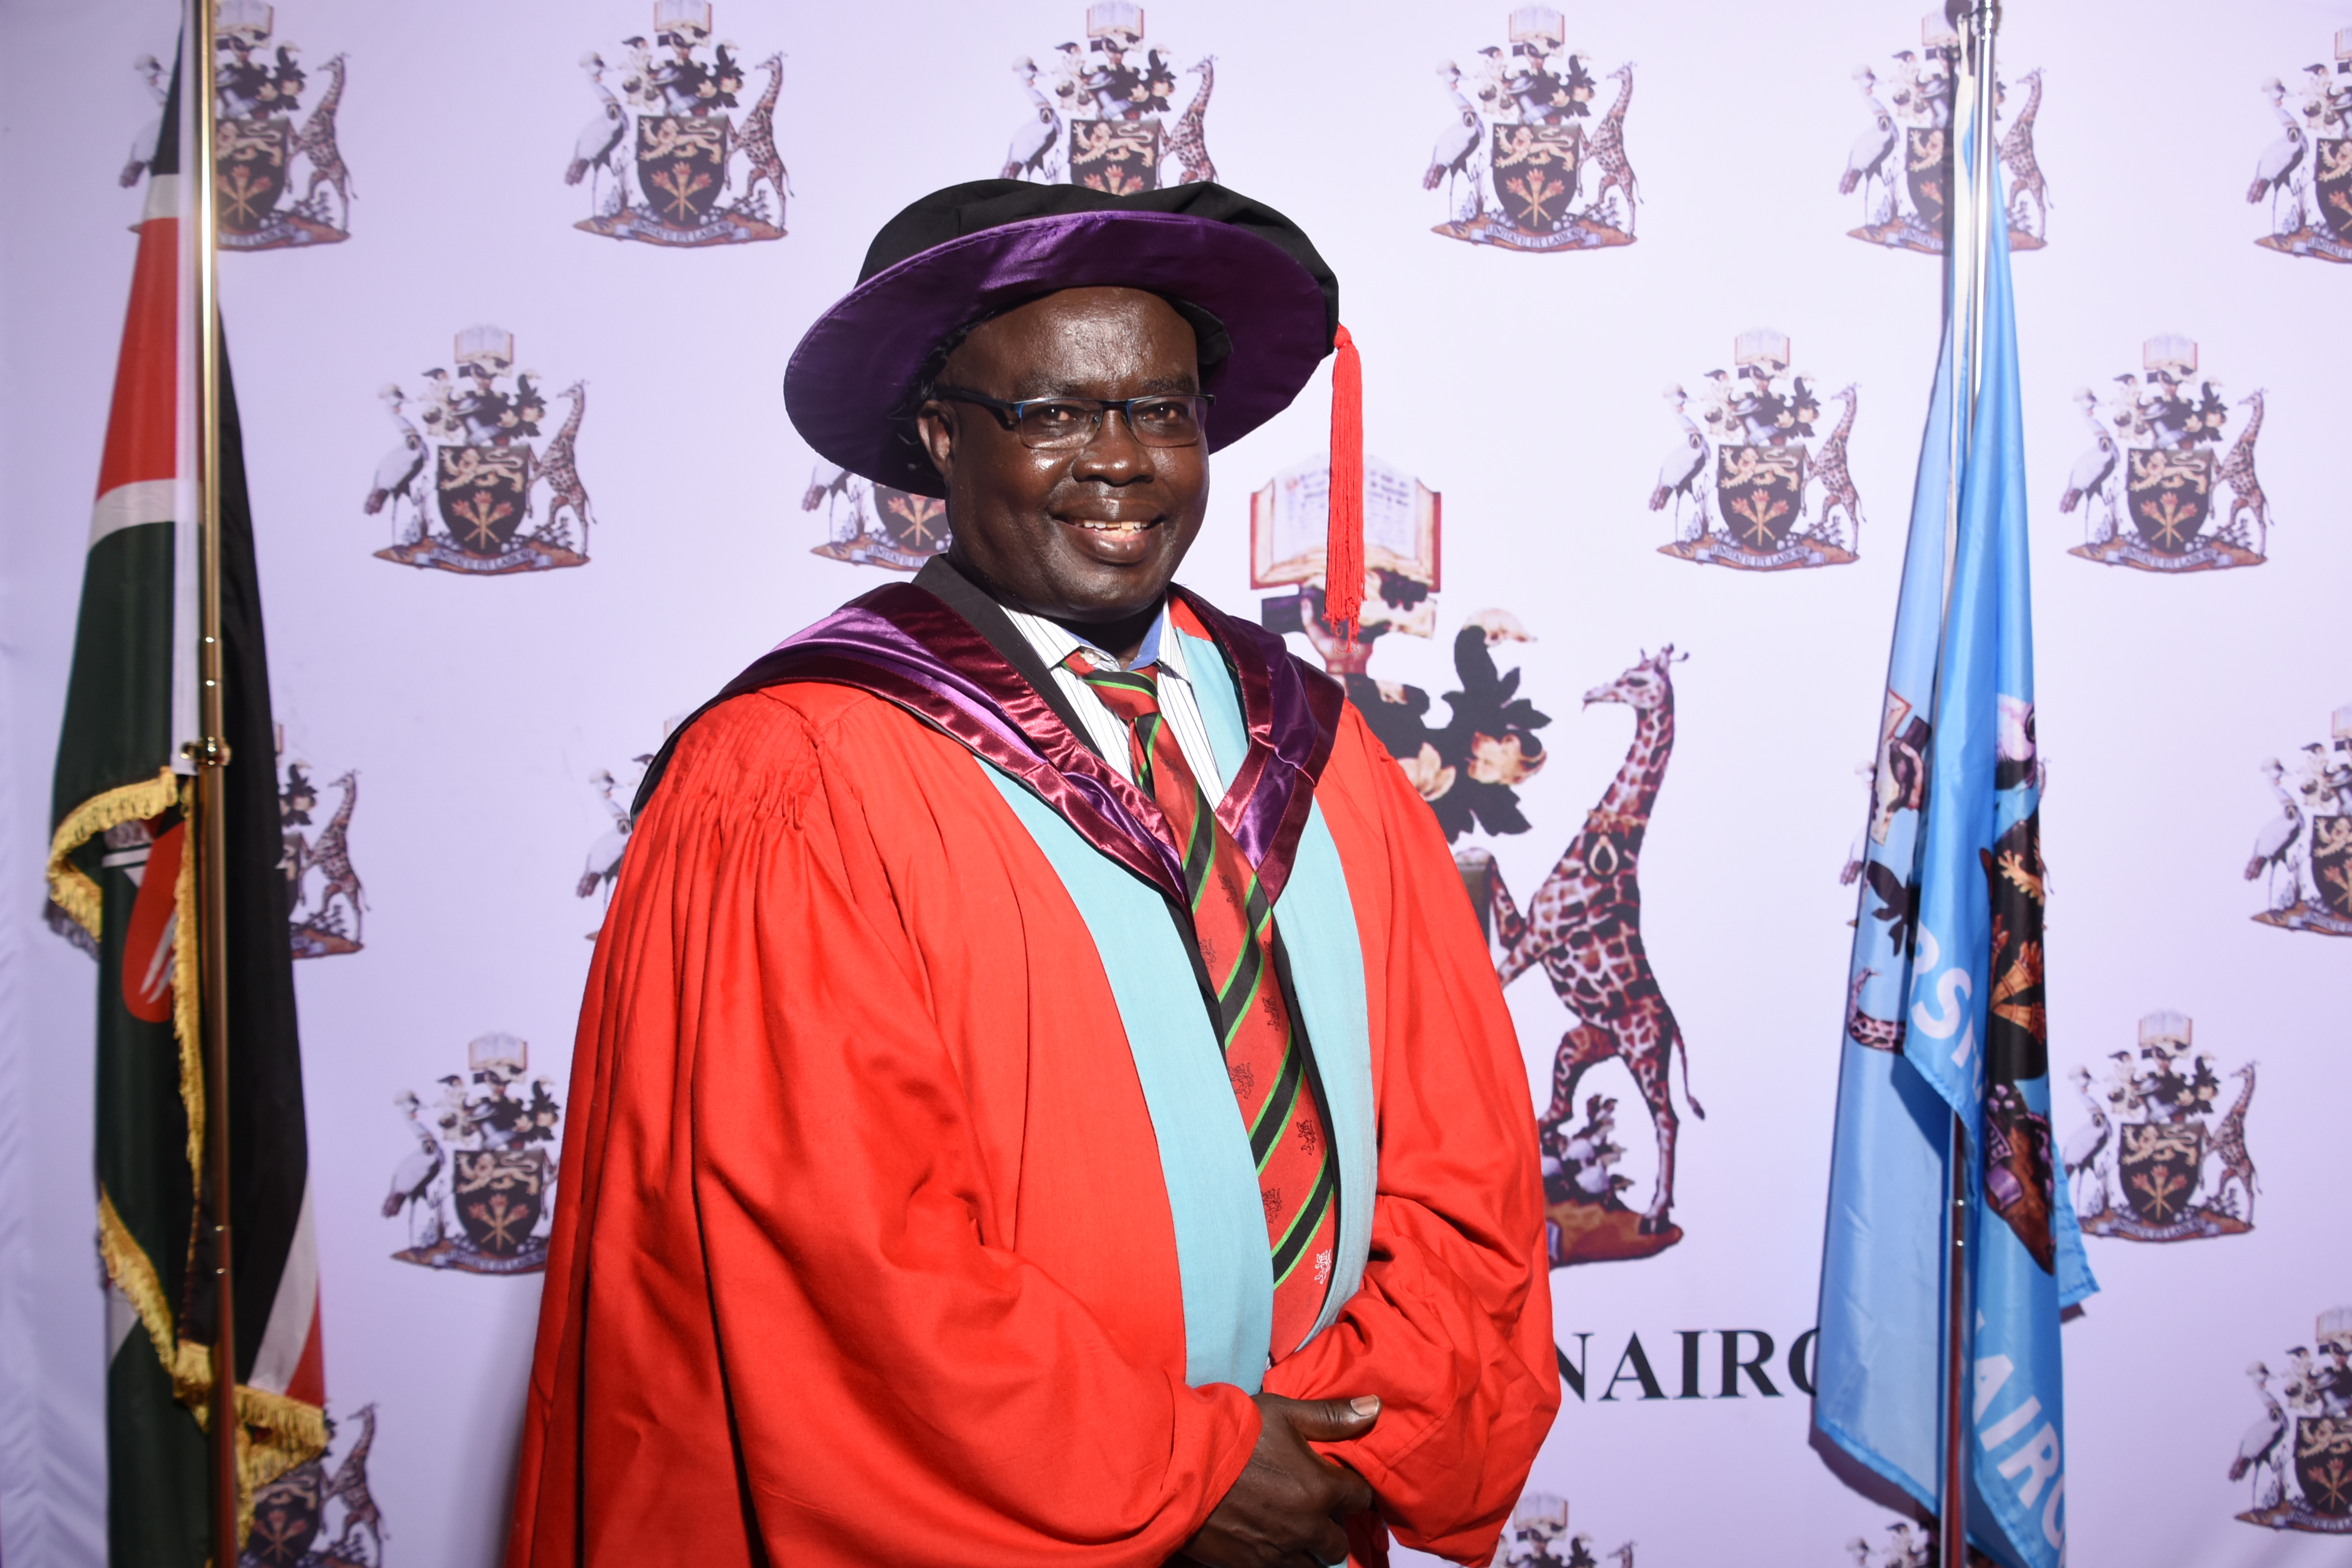 Dr. Michael David Otieno